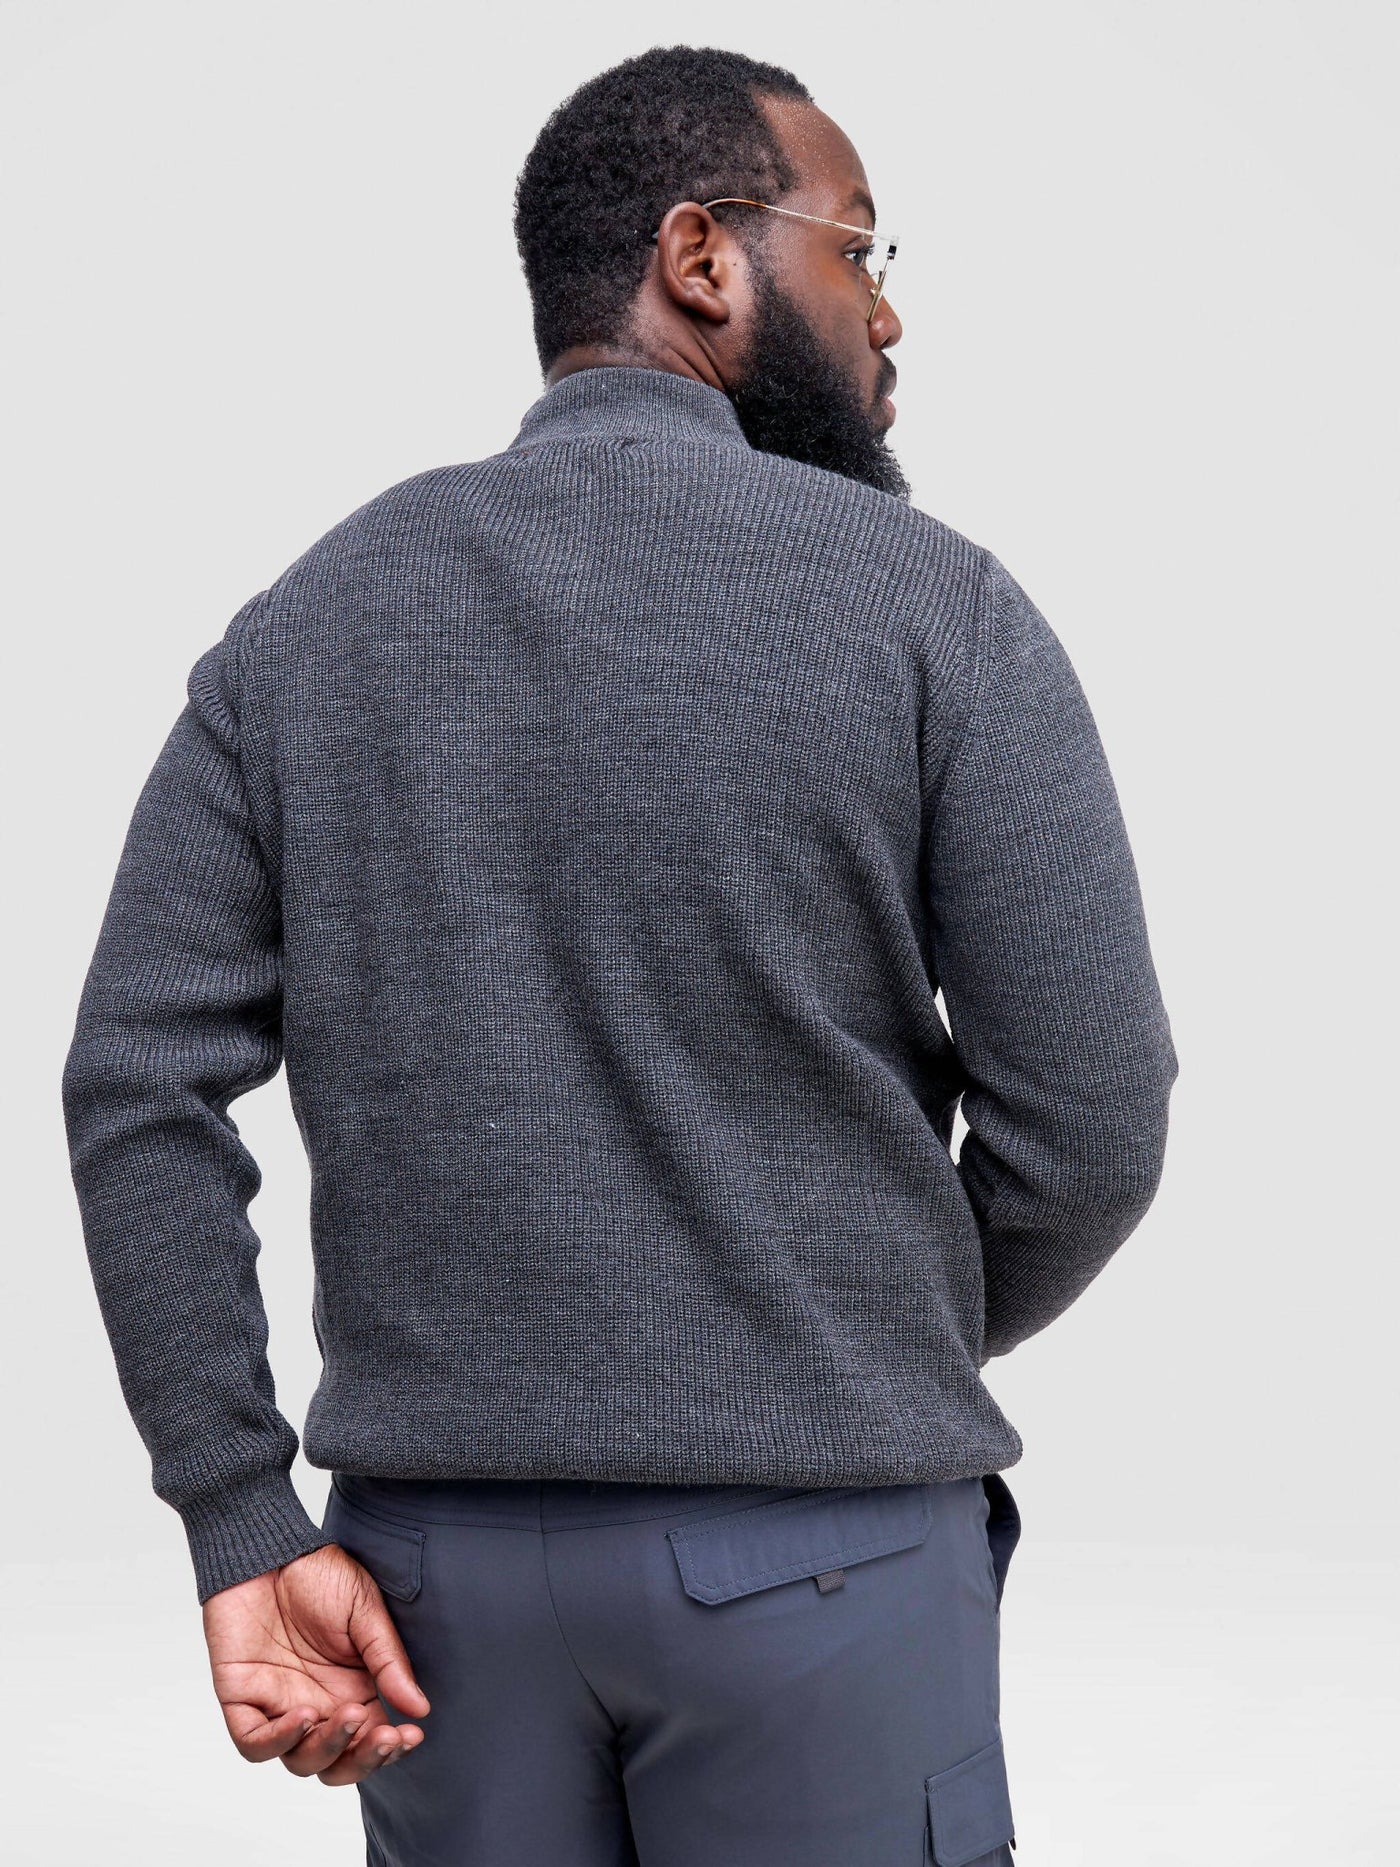 Anel's Knitwear Zetu Men's Half Zipped Sweater - Grey - Shopzetu